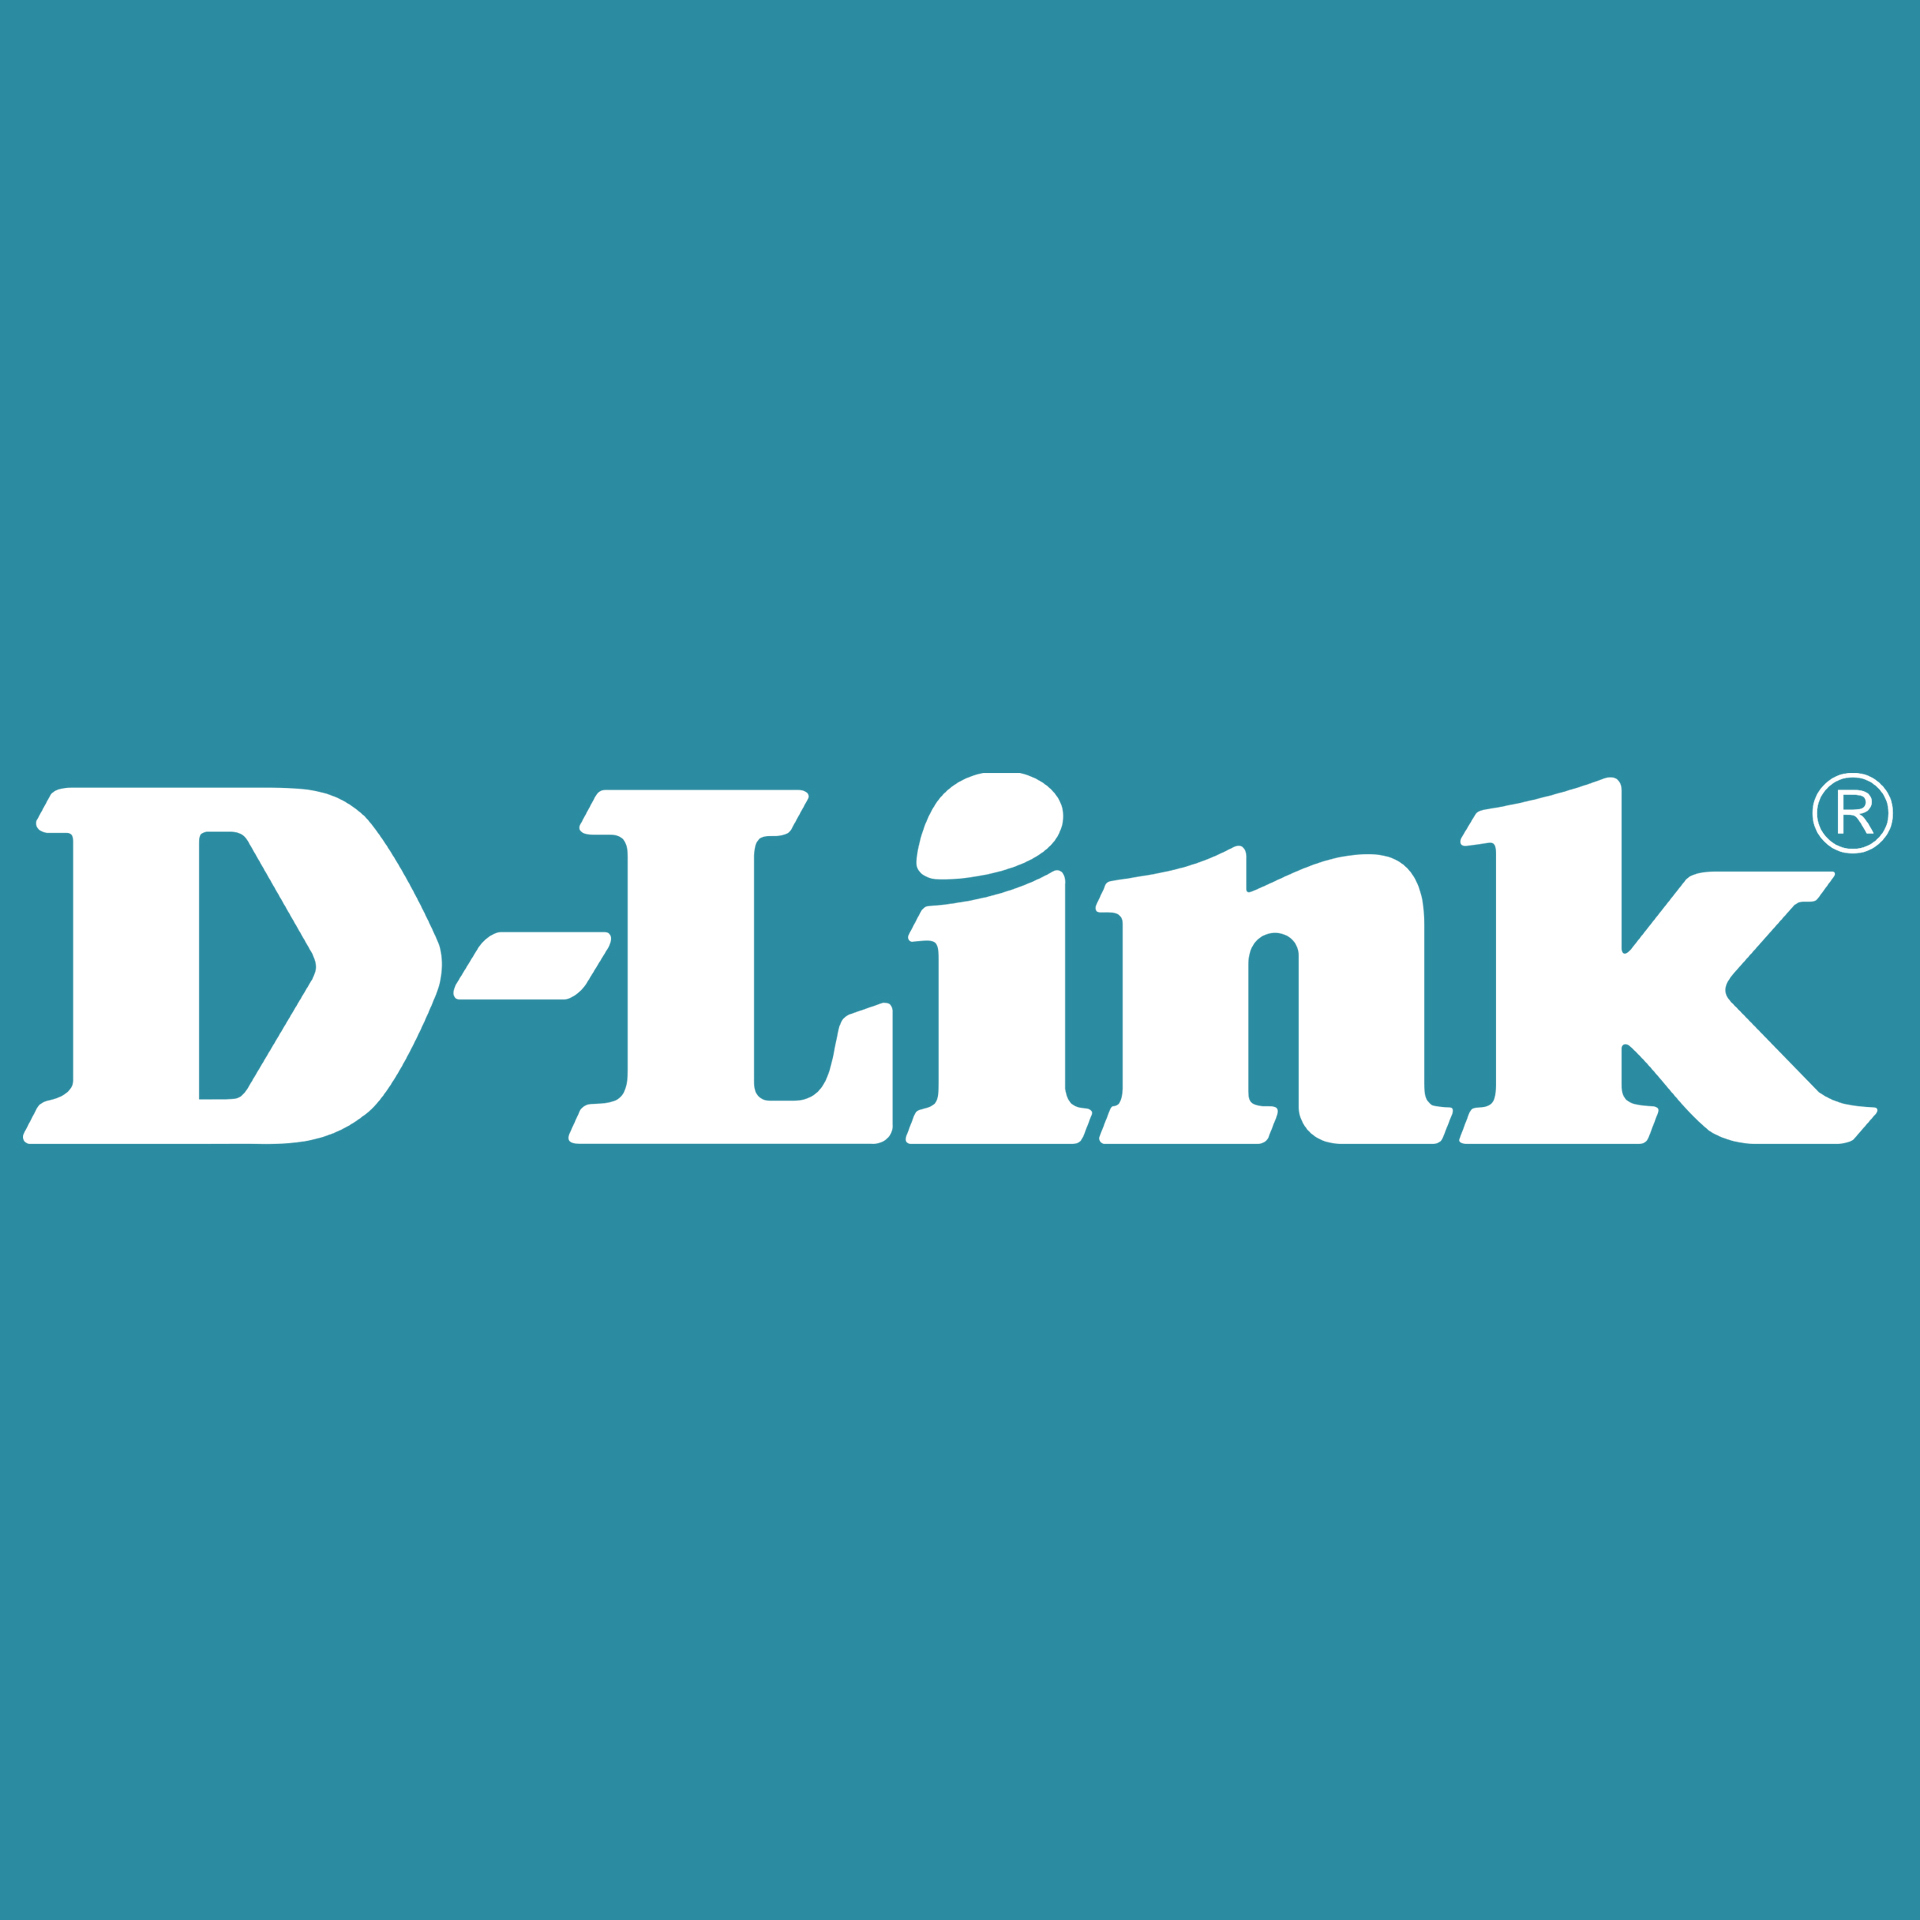 Ру тв линк. D link бренд. Эмблема d link. Линк логотип. Delink логотип.